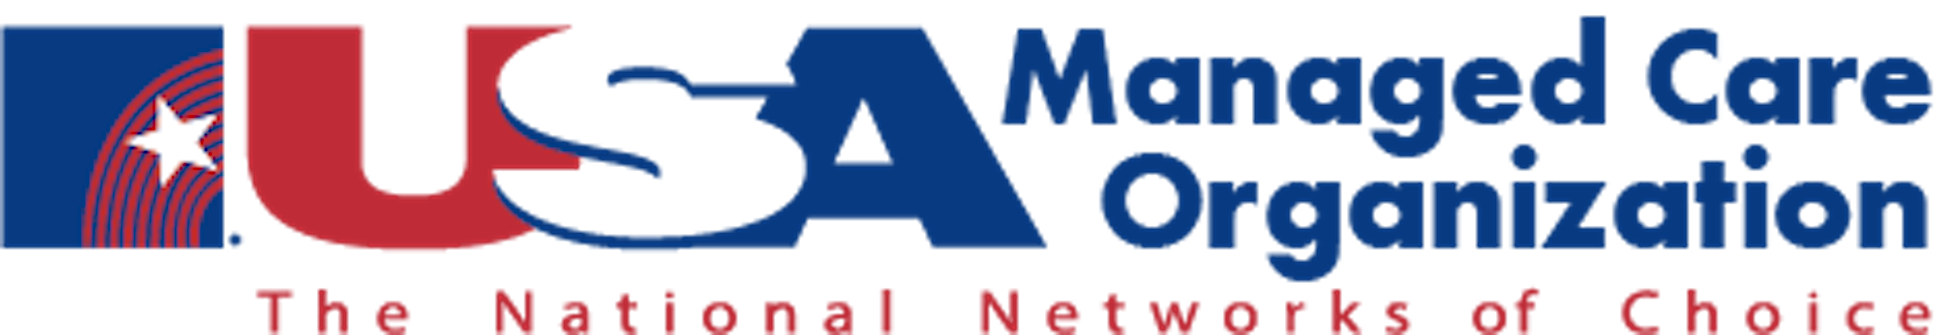 USA Managed Care Organization Logo